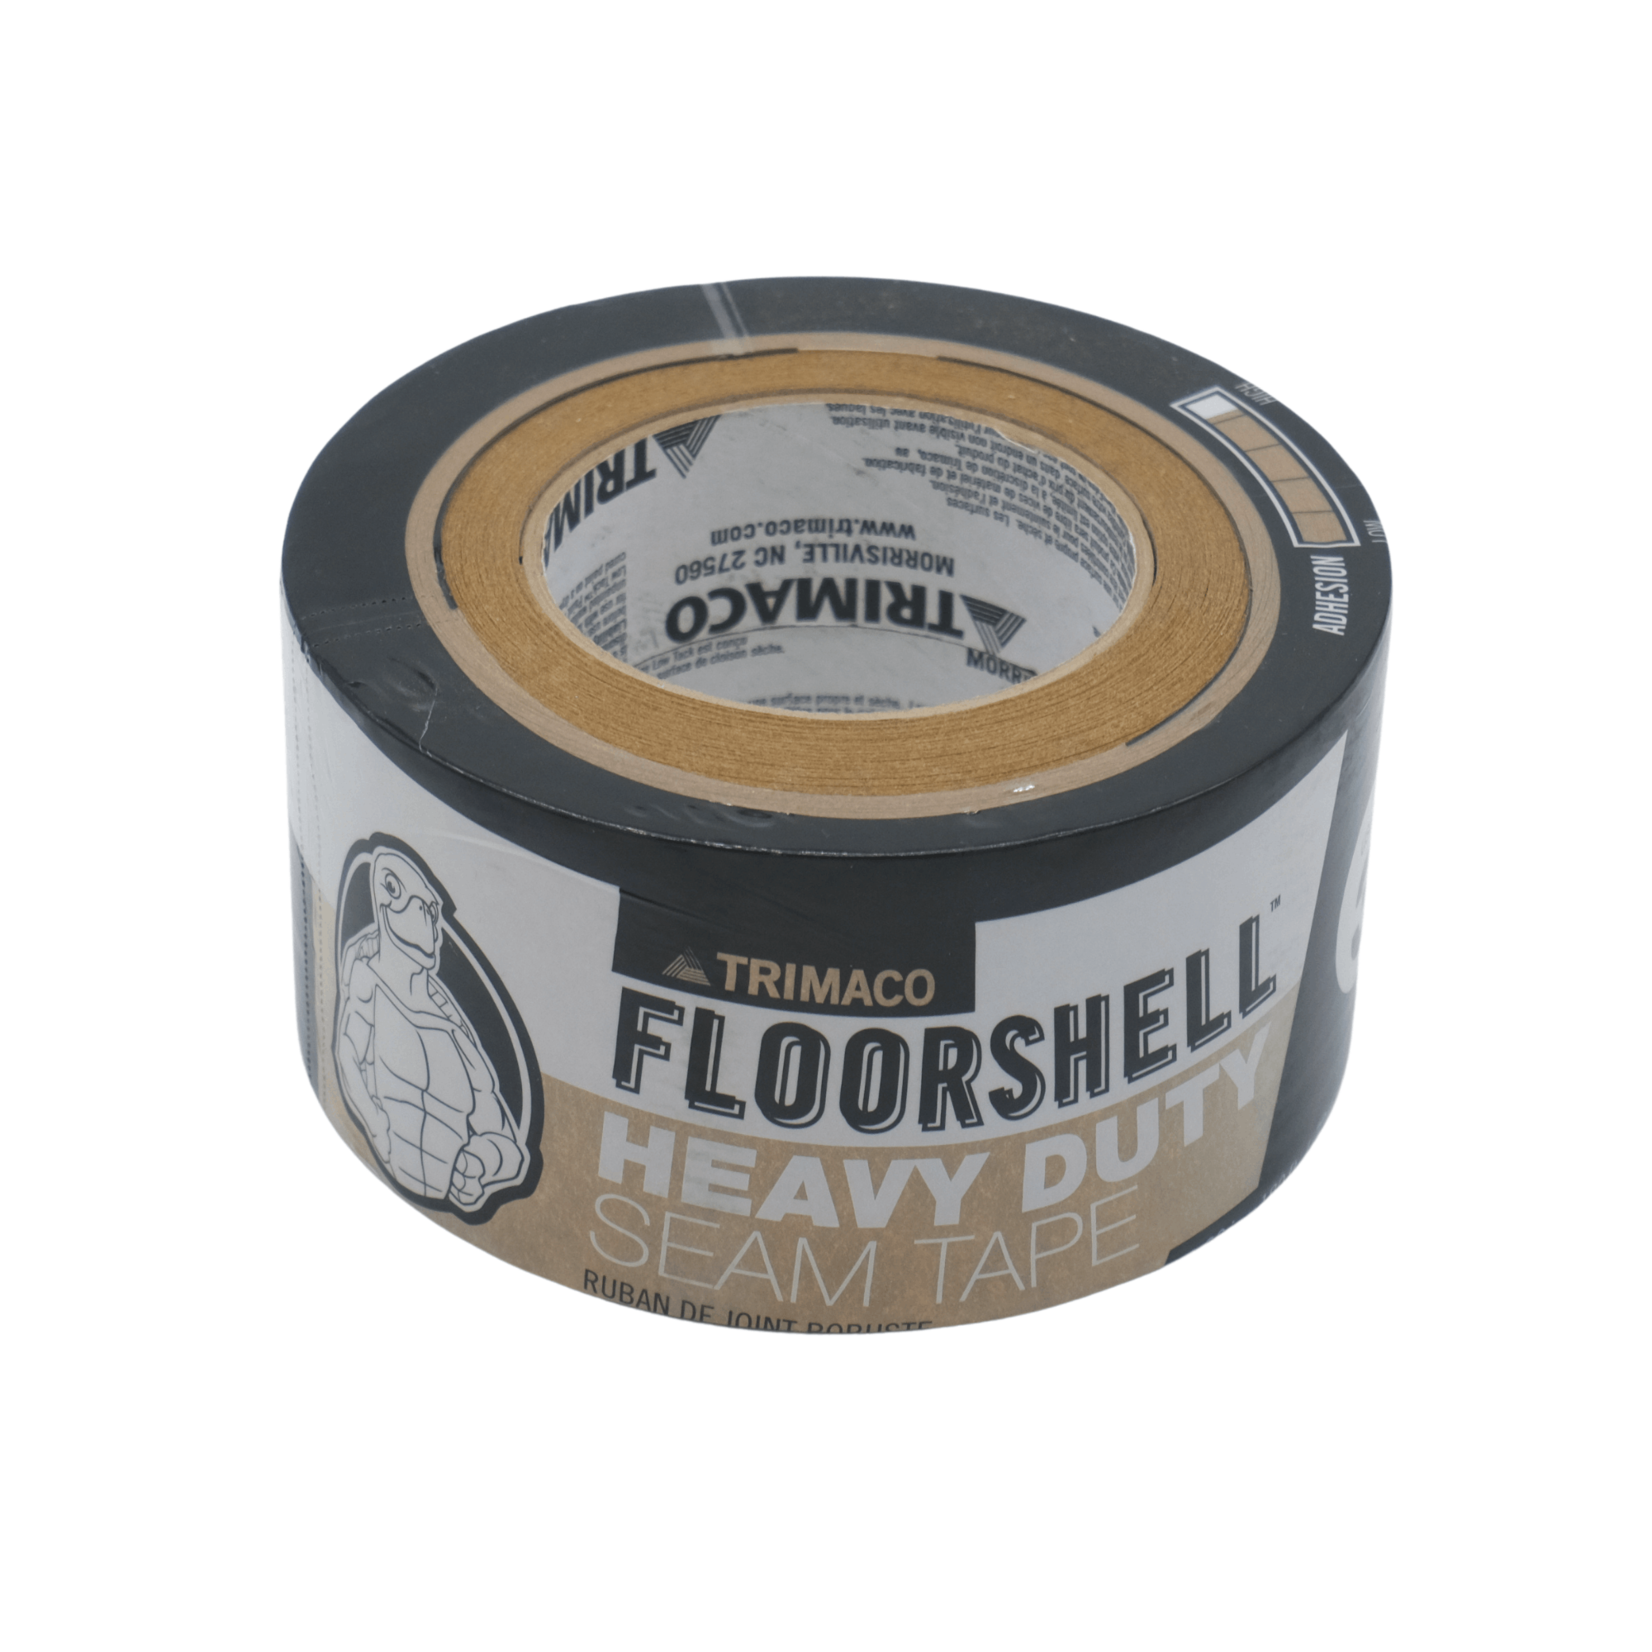 Heavy  Duty Seam Tape Floorshell High Adhesion